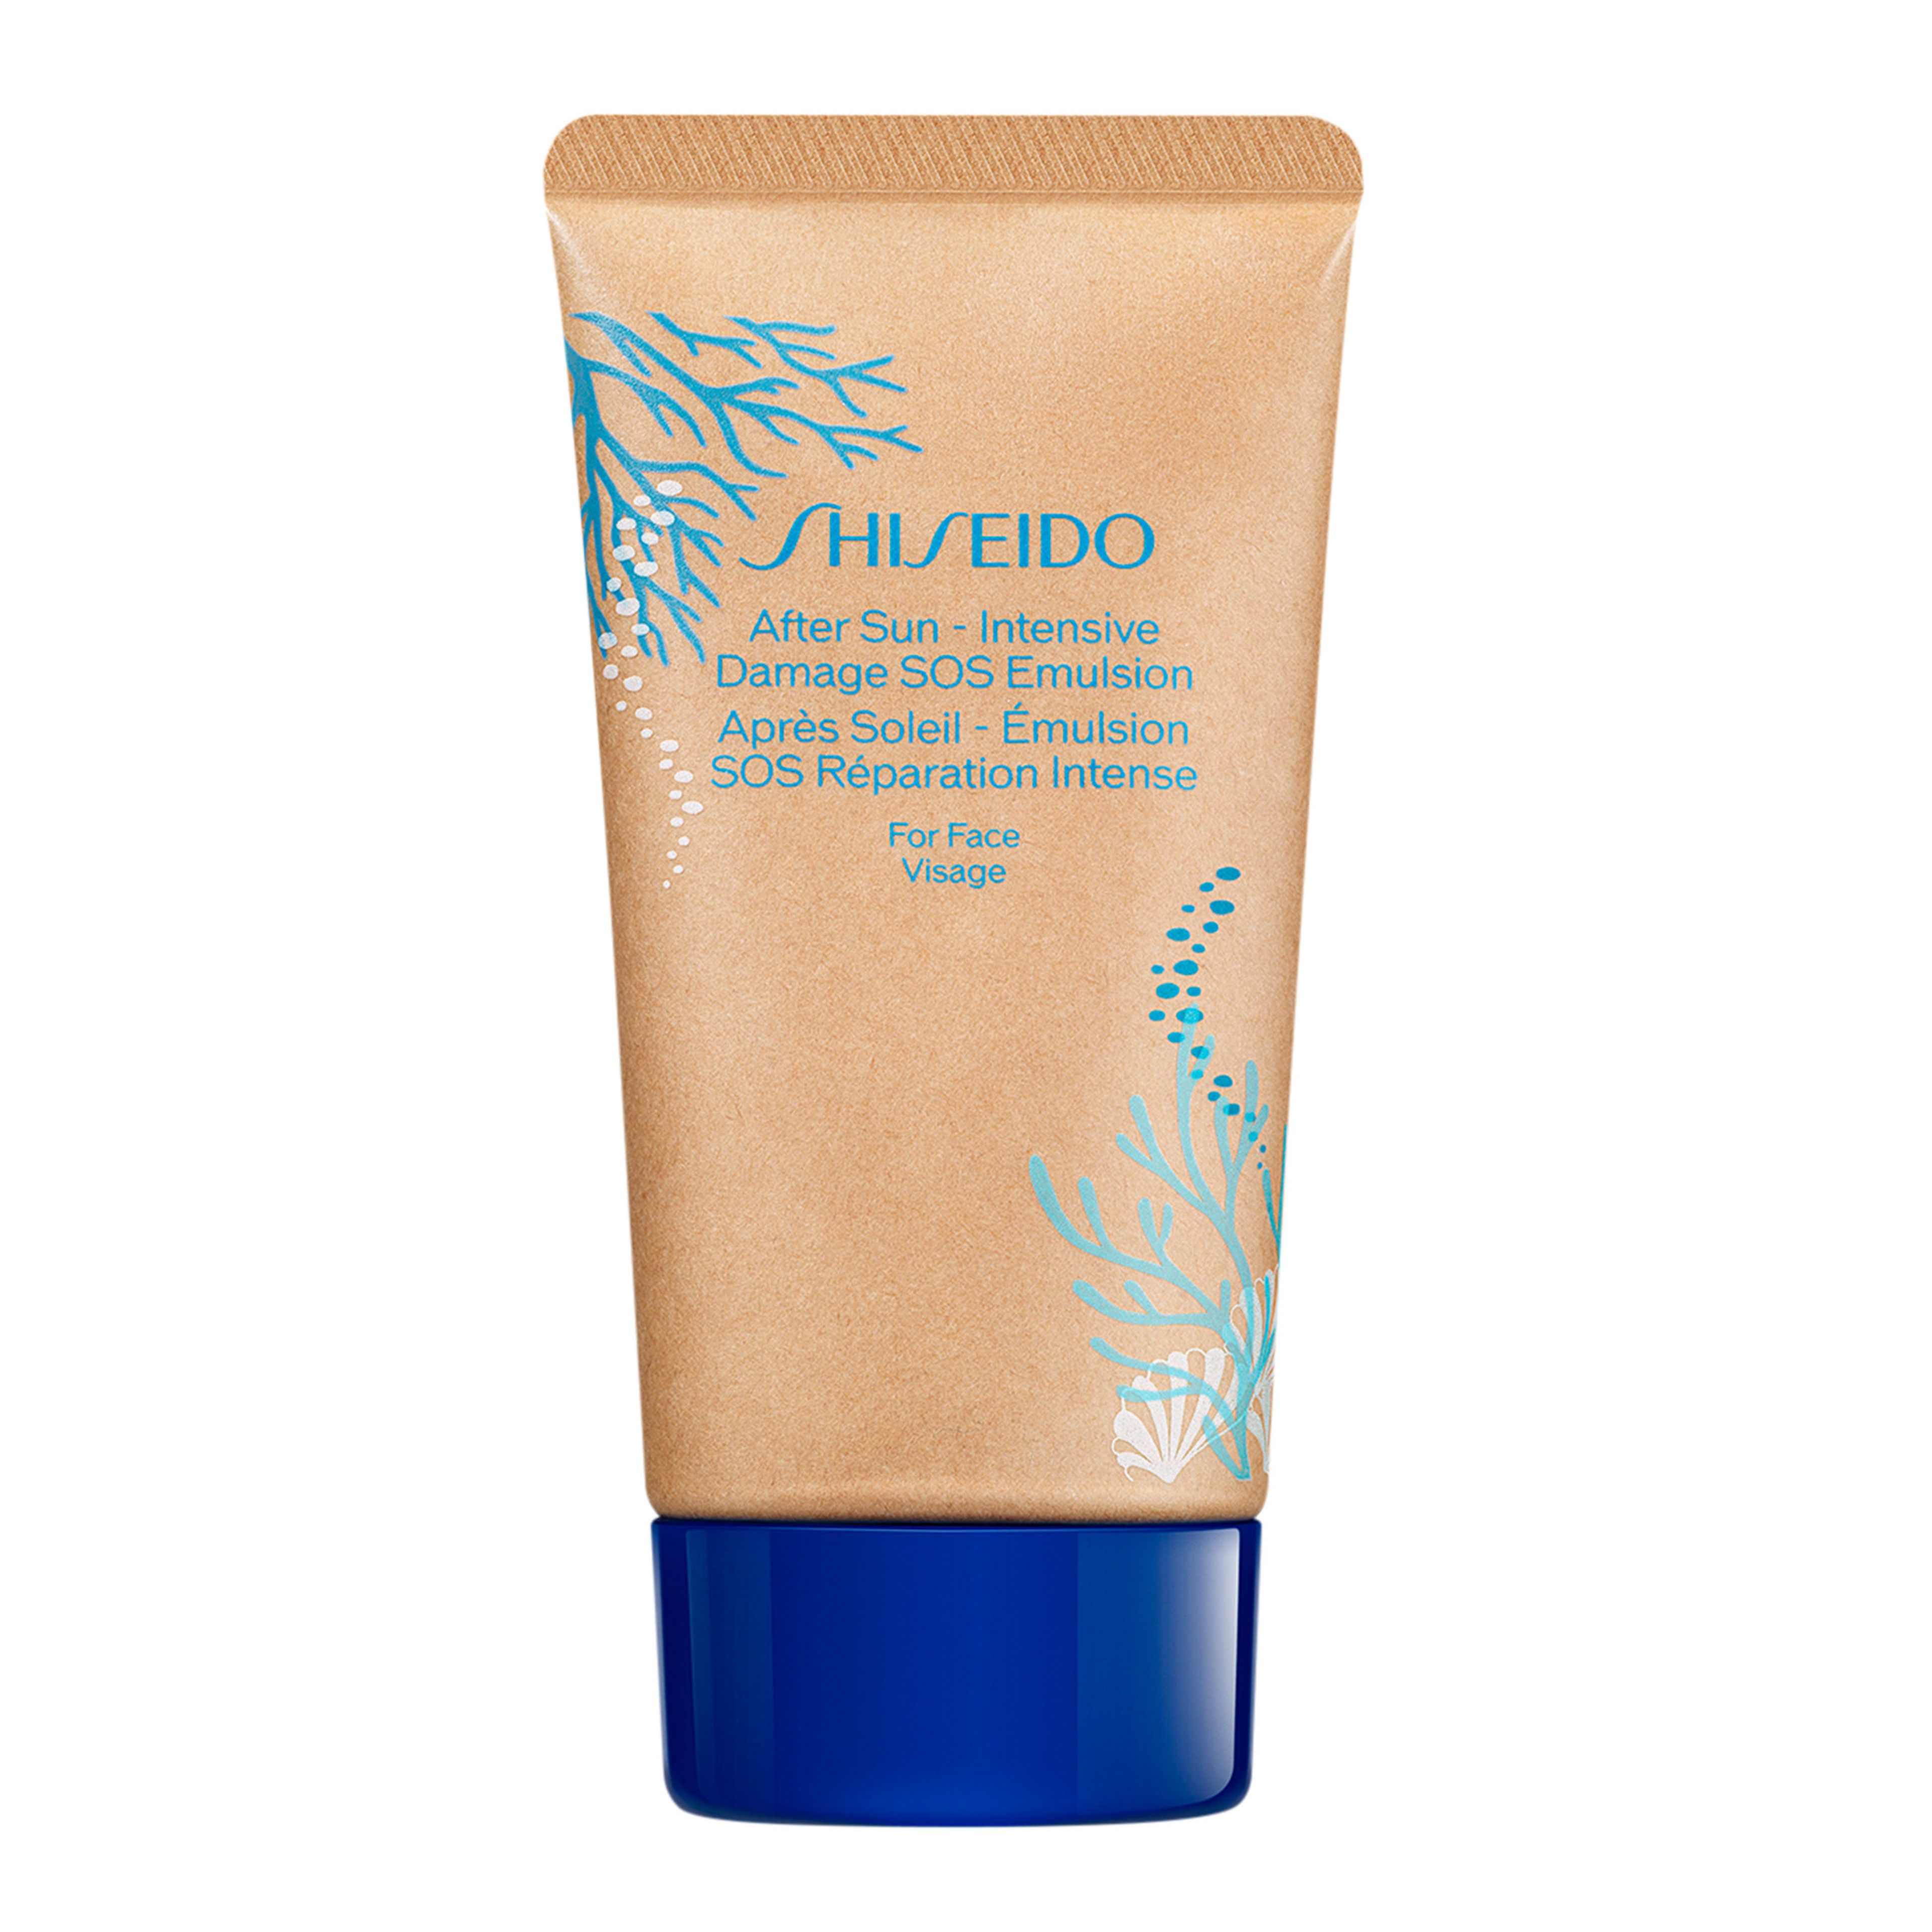 Shiseido After Sun - Intensive Damage Sos Emulsion 1